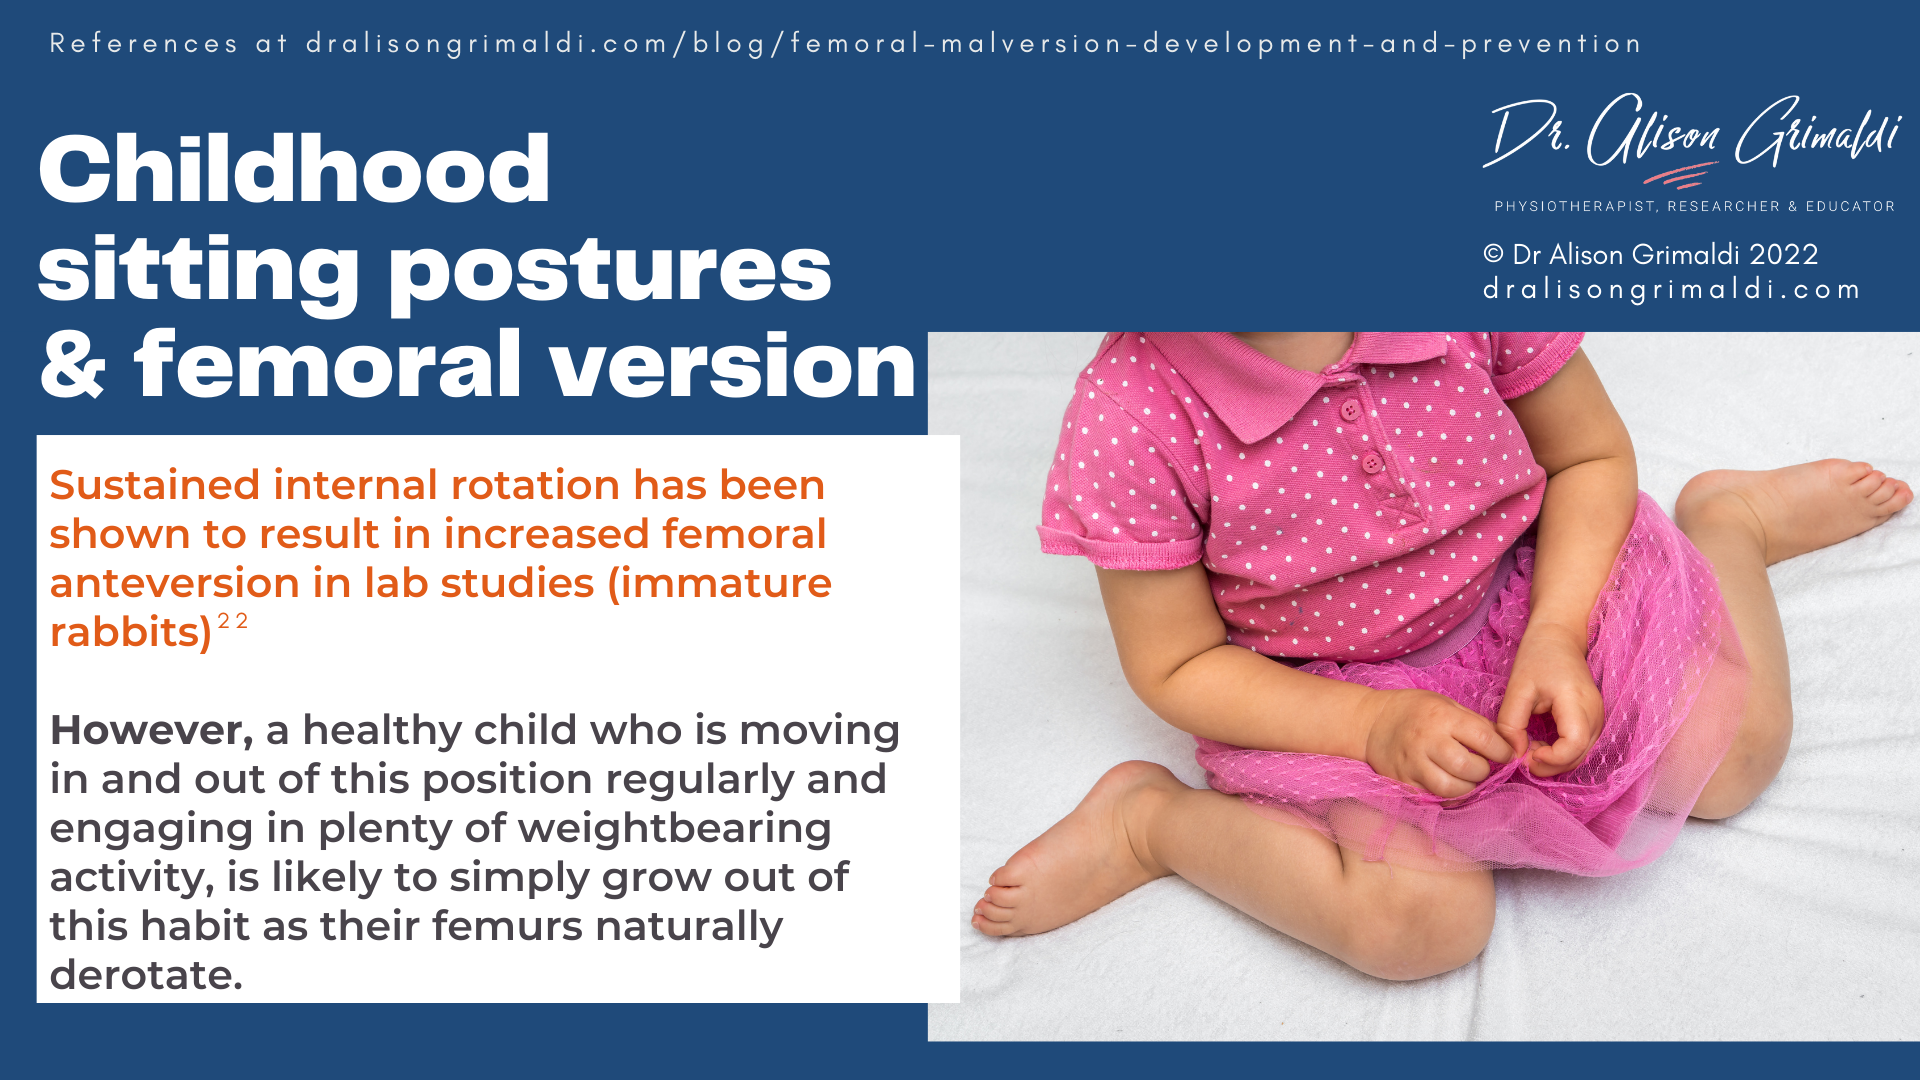 Childhood sitting postures & femoral version